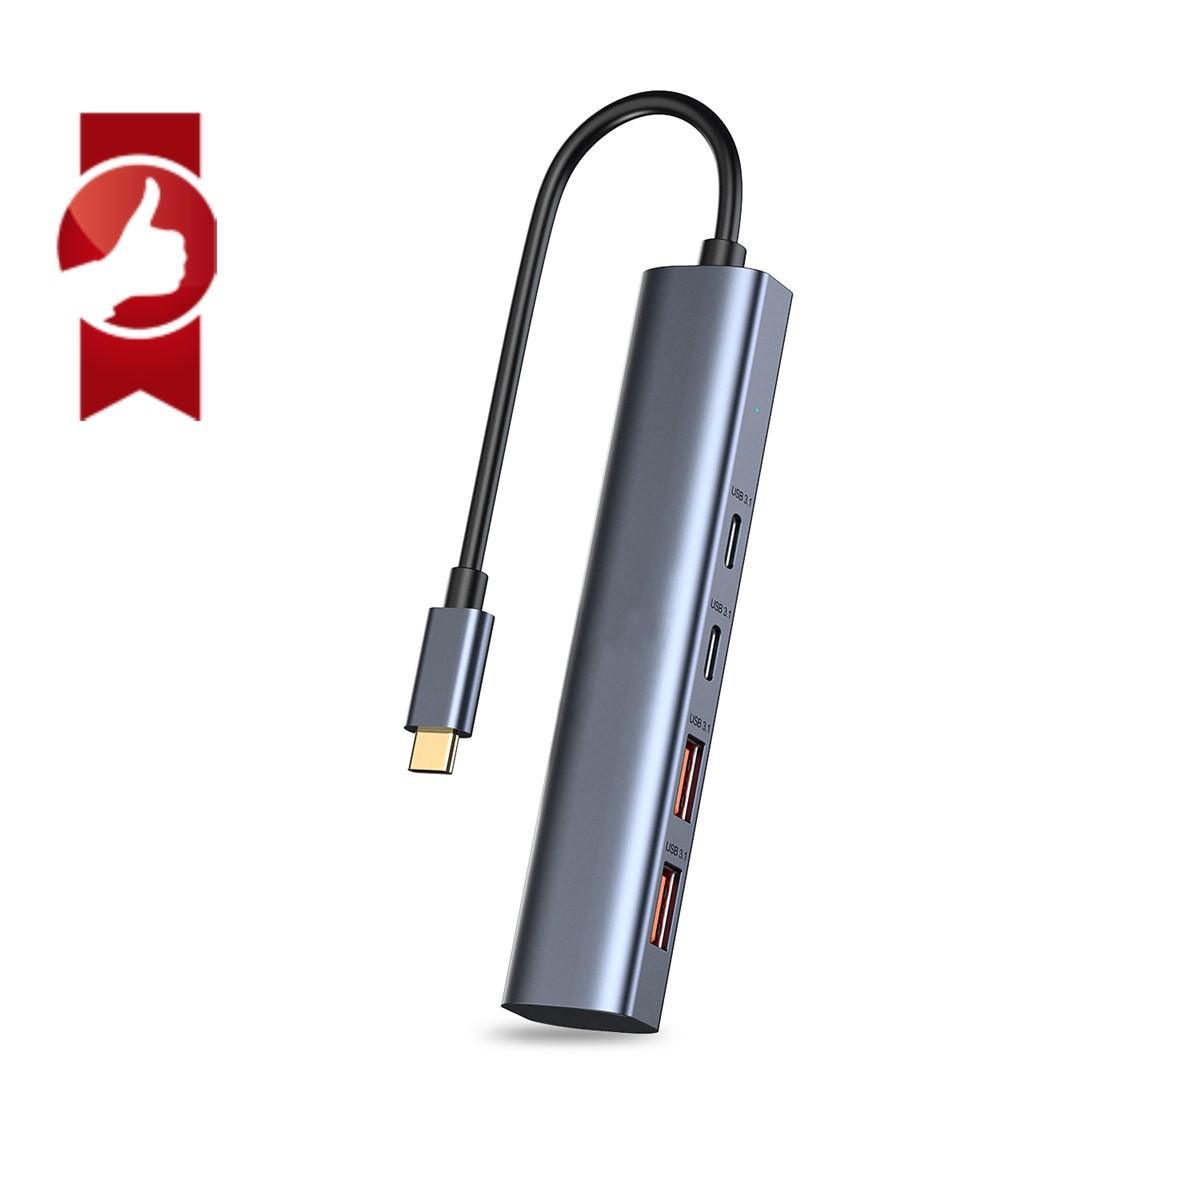 USB-C dock vs. Thunderbolt: DisplayLink pros and cons